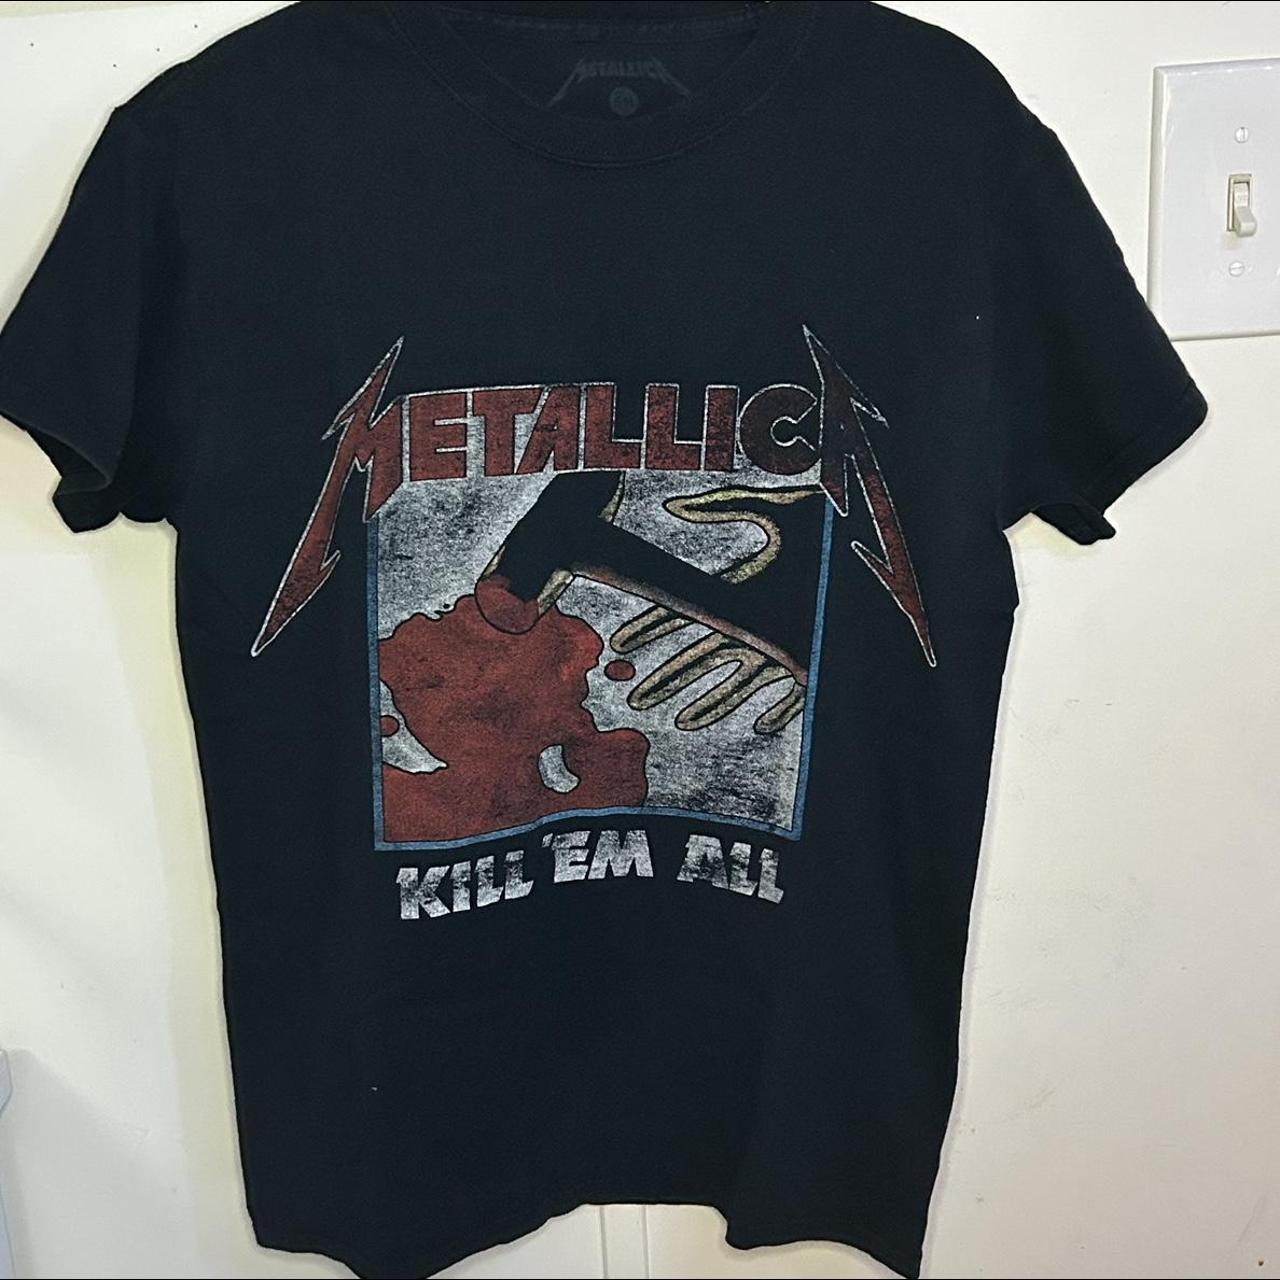 Men's Metallica Short Sleeve Graphic T-Shirt - Black S